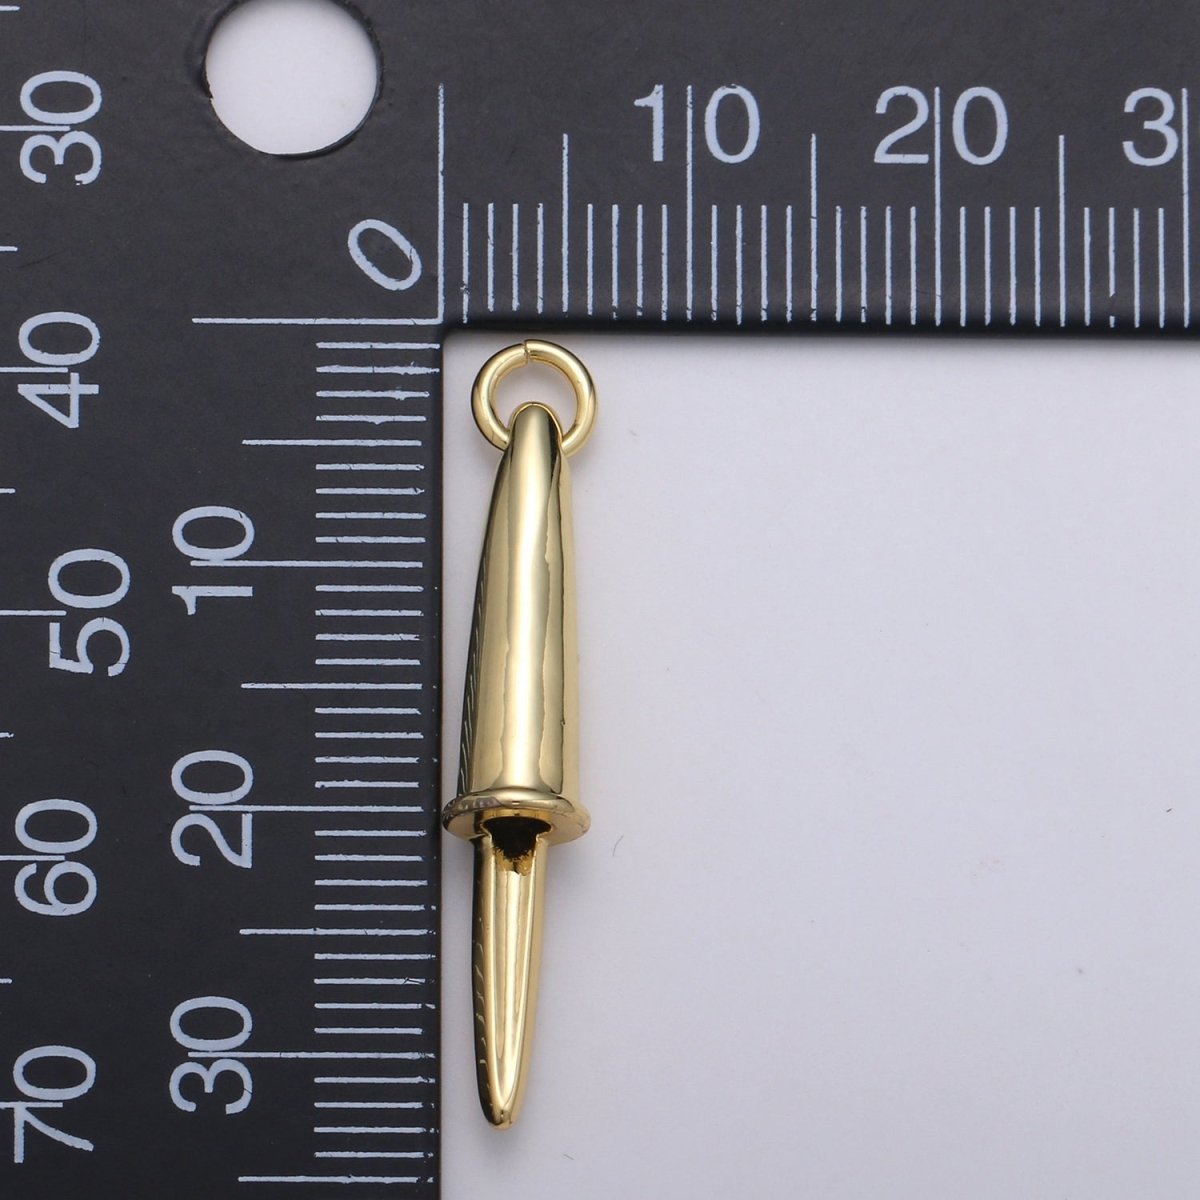 Gold Filled Pen Charm D-783 - DLUXCA